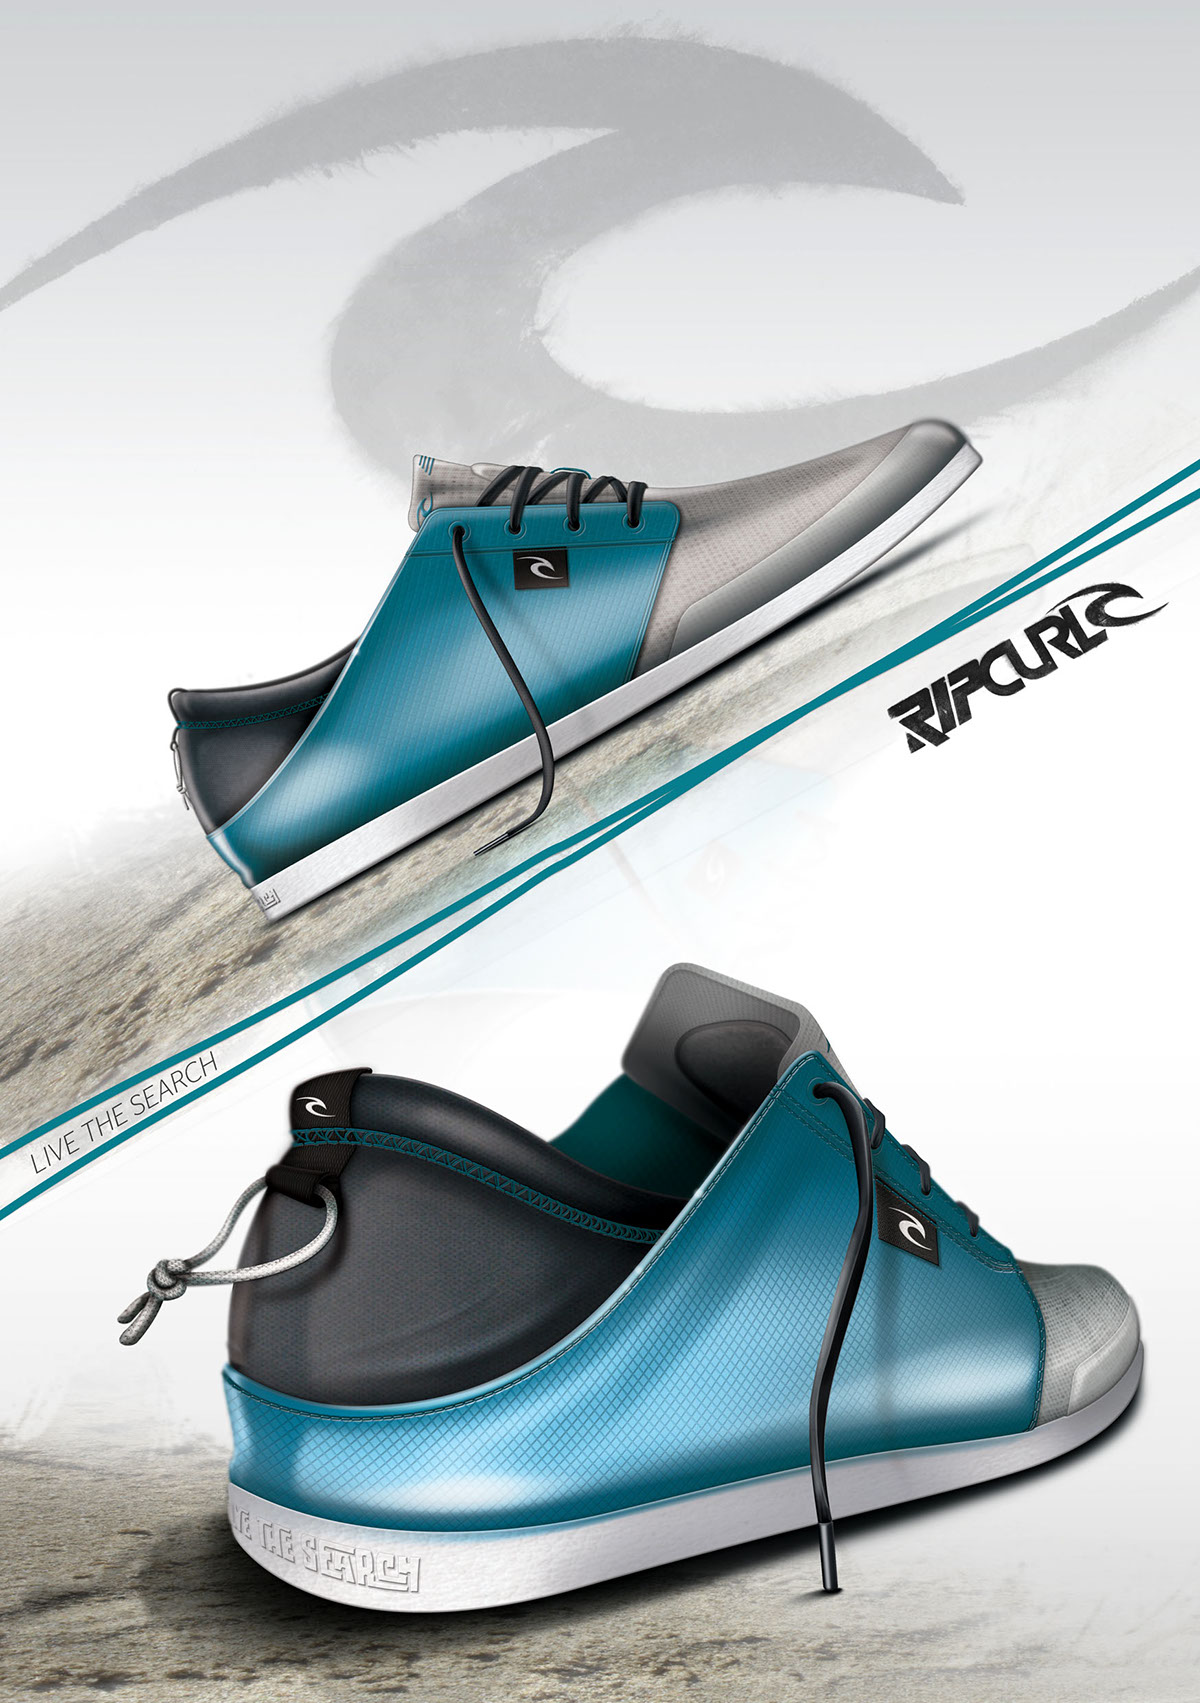 Rip Curl ripcurl Chaussures Eva neoprene Surf ride footwear shoe beach Sportswear Quicksilver lifestyle after concept